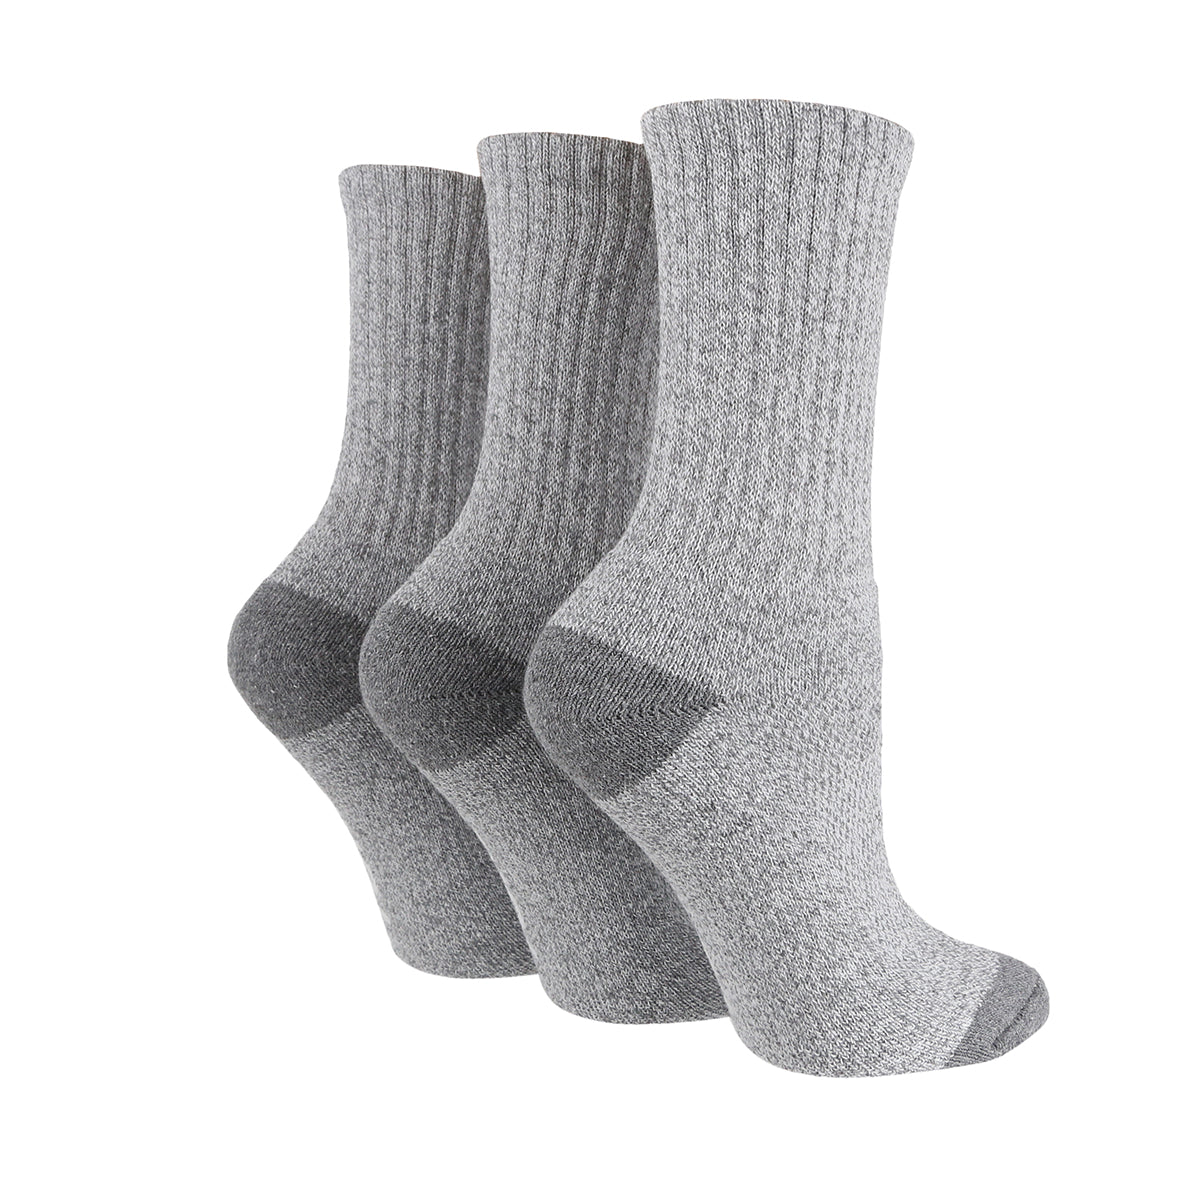 TORE 100% Recycled Women's Plain Trainer Socks - 3 Pairs